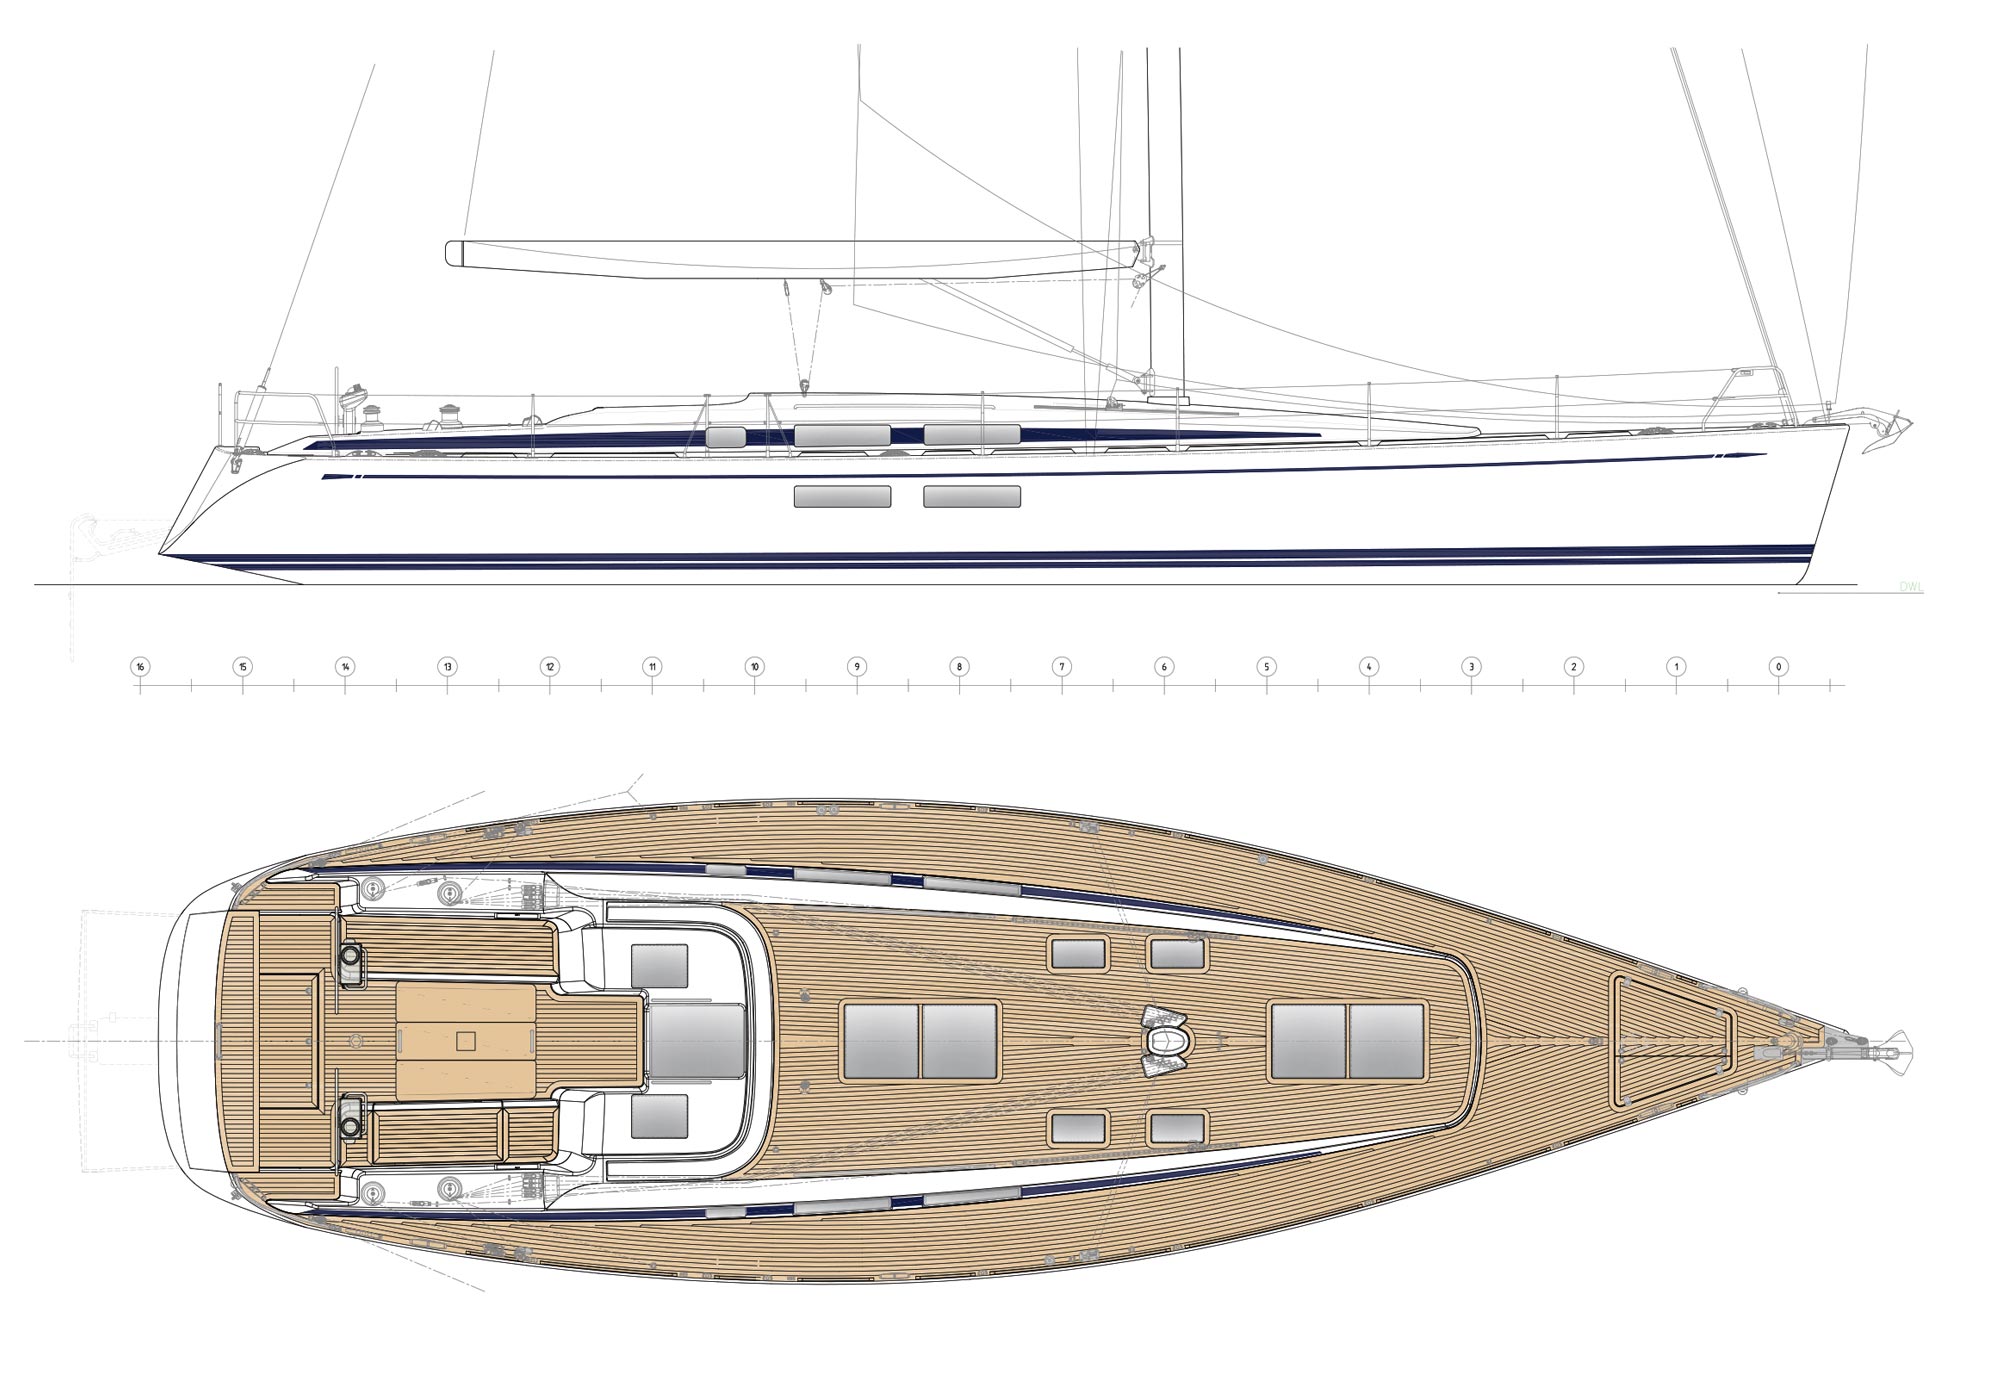 54' bluewater yacht